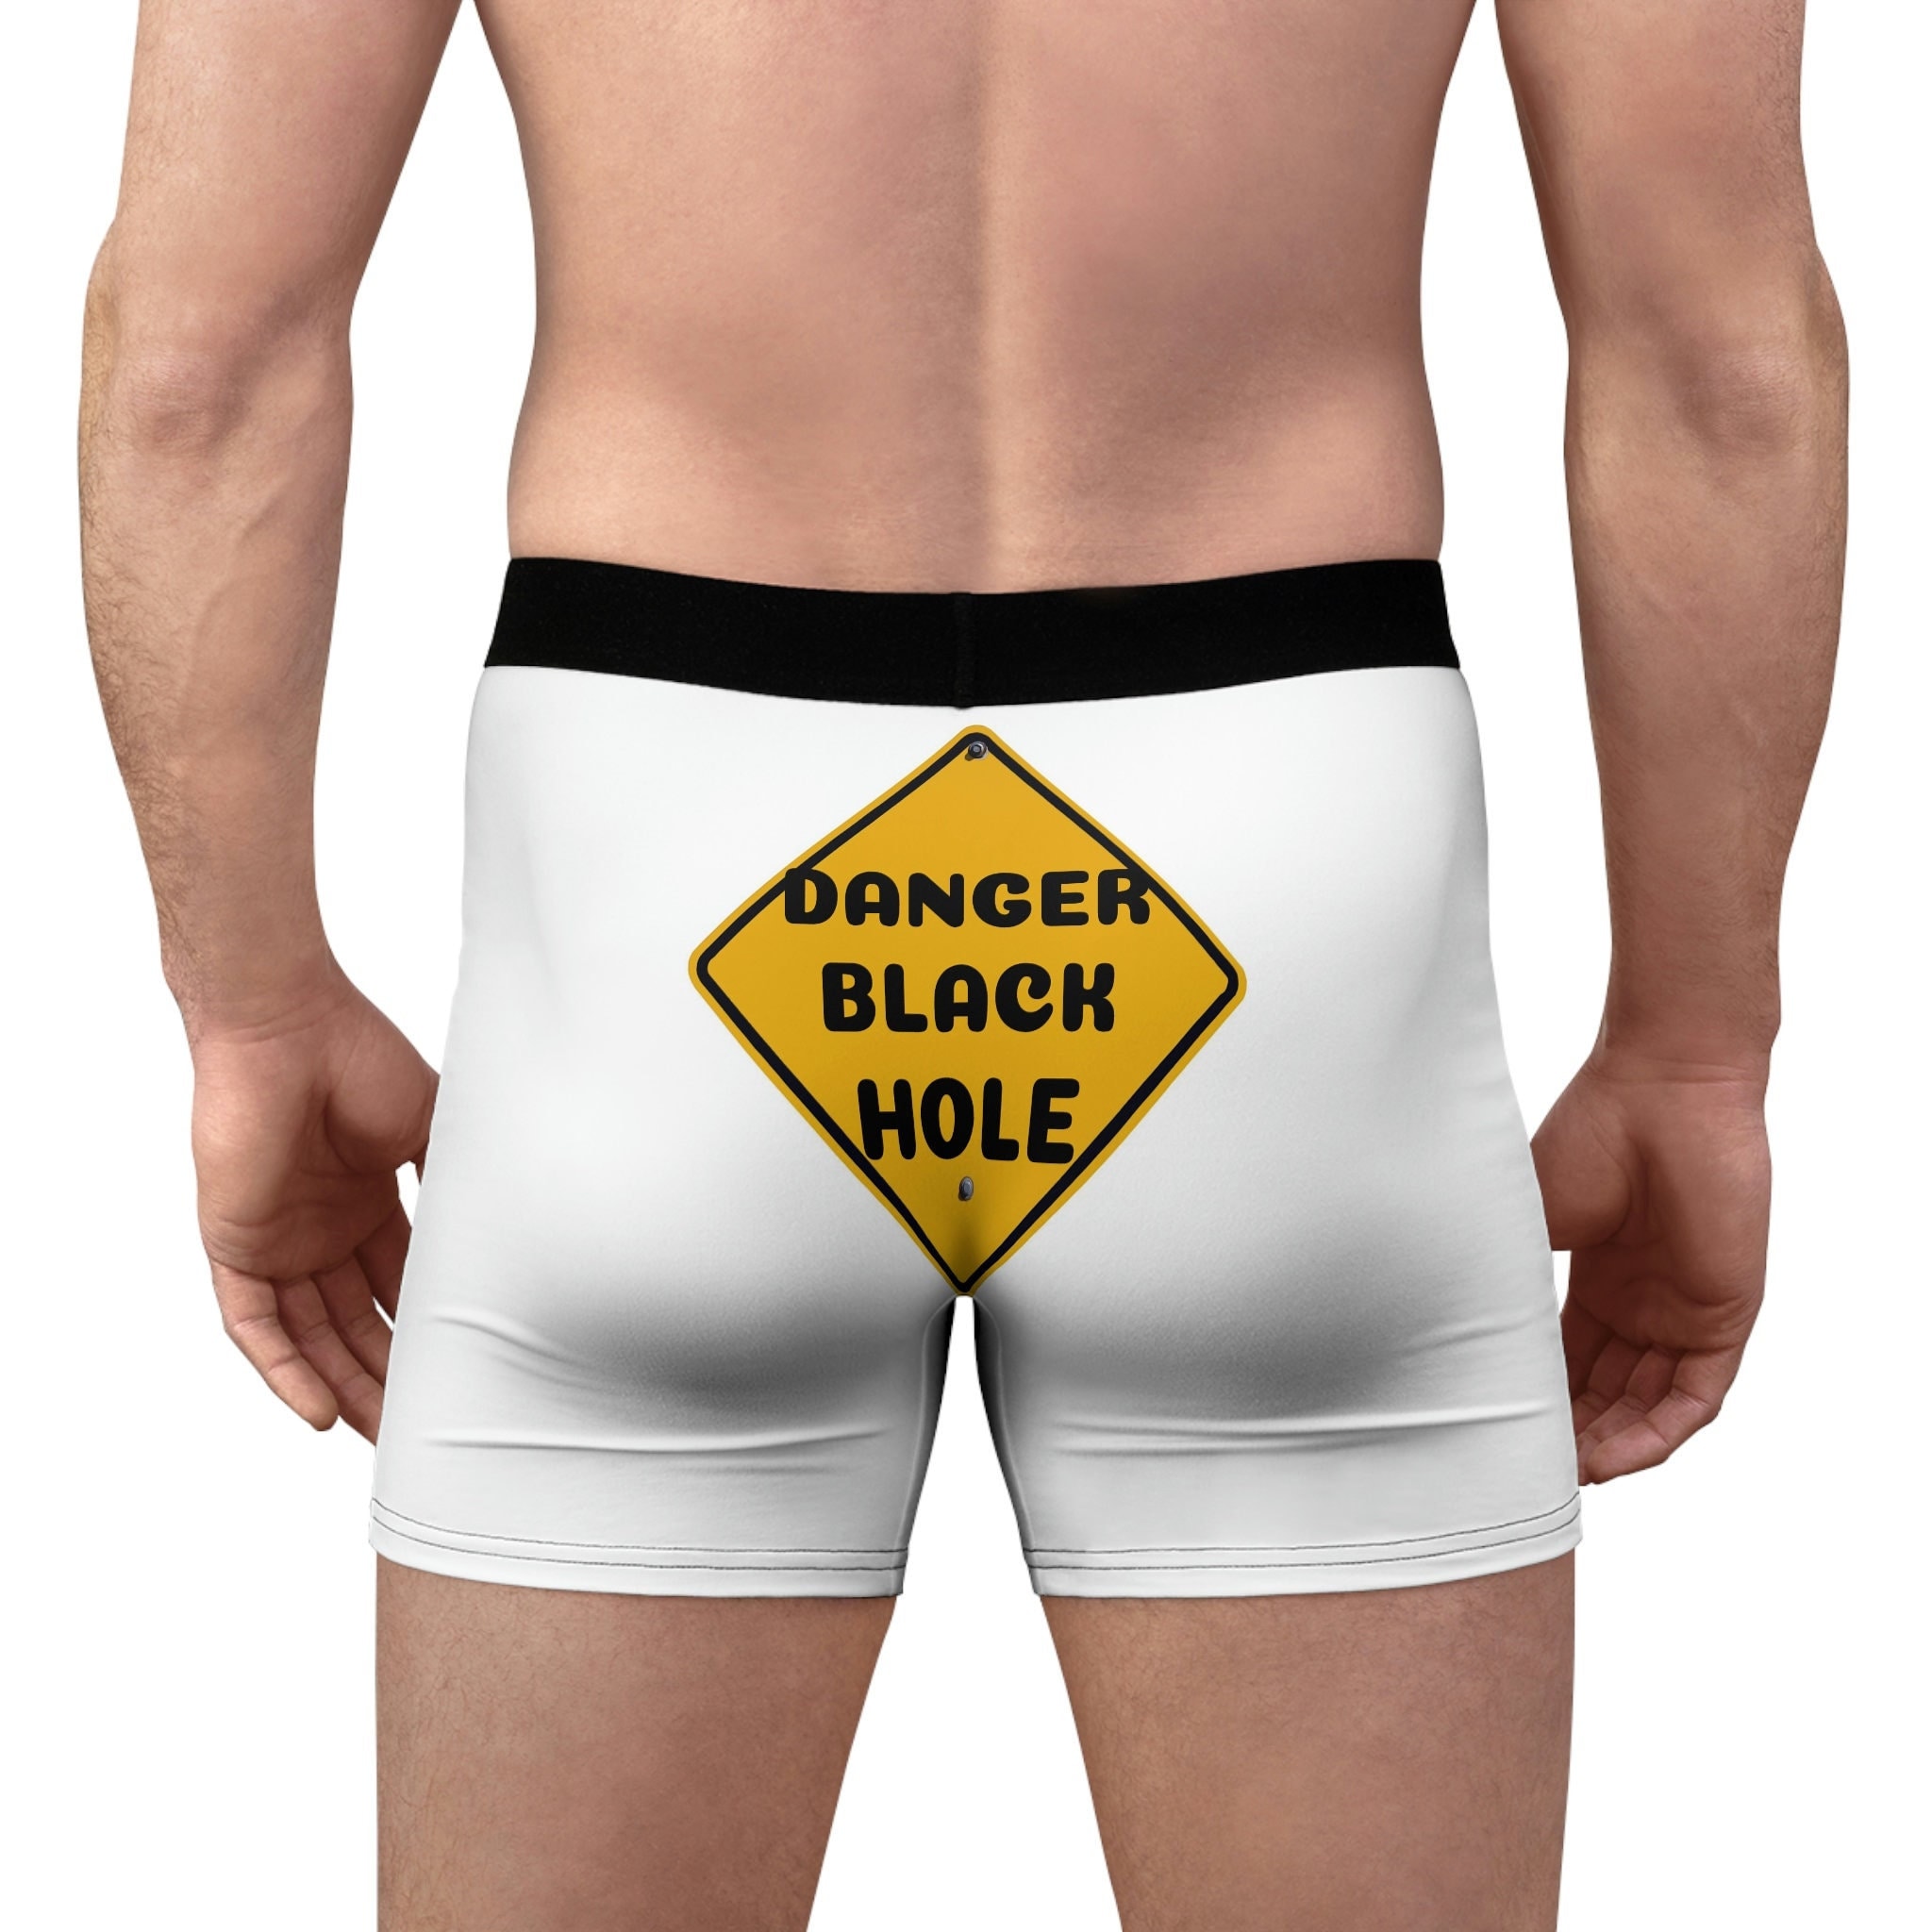 Danger Black Hole, Men's Boxer Briefs, Gag Gift, Adult Humor, Black Hole,  Fundies, Underwear 